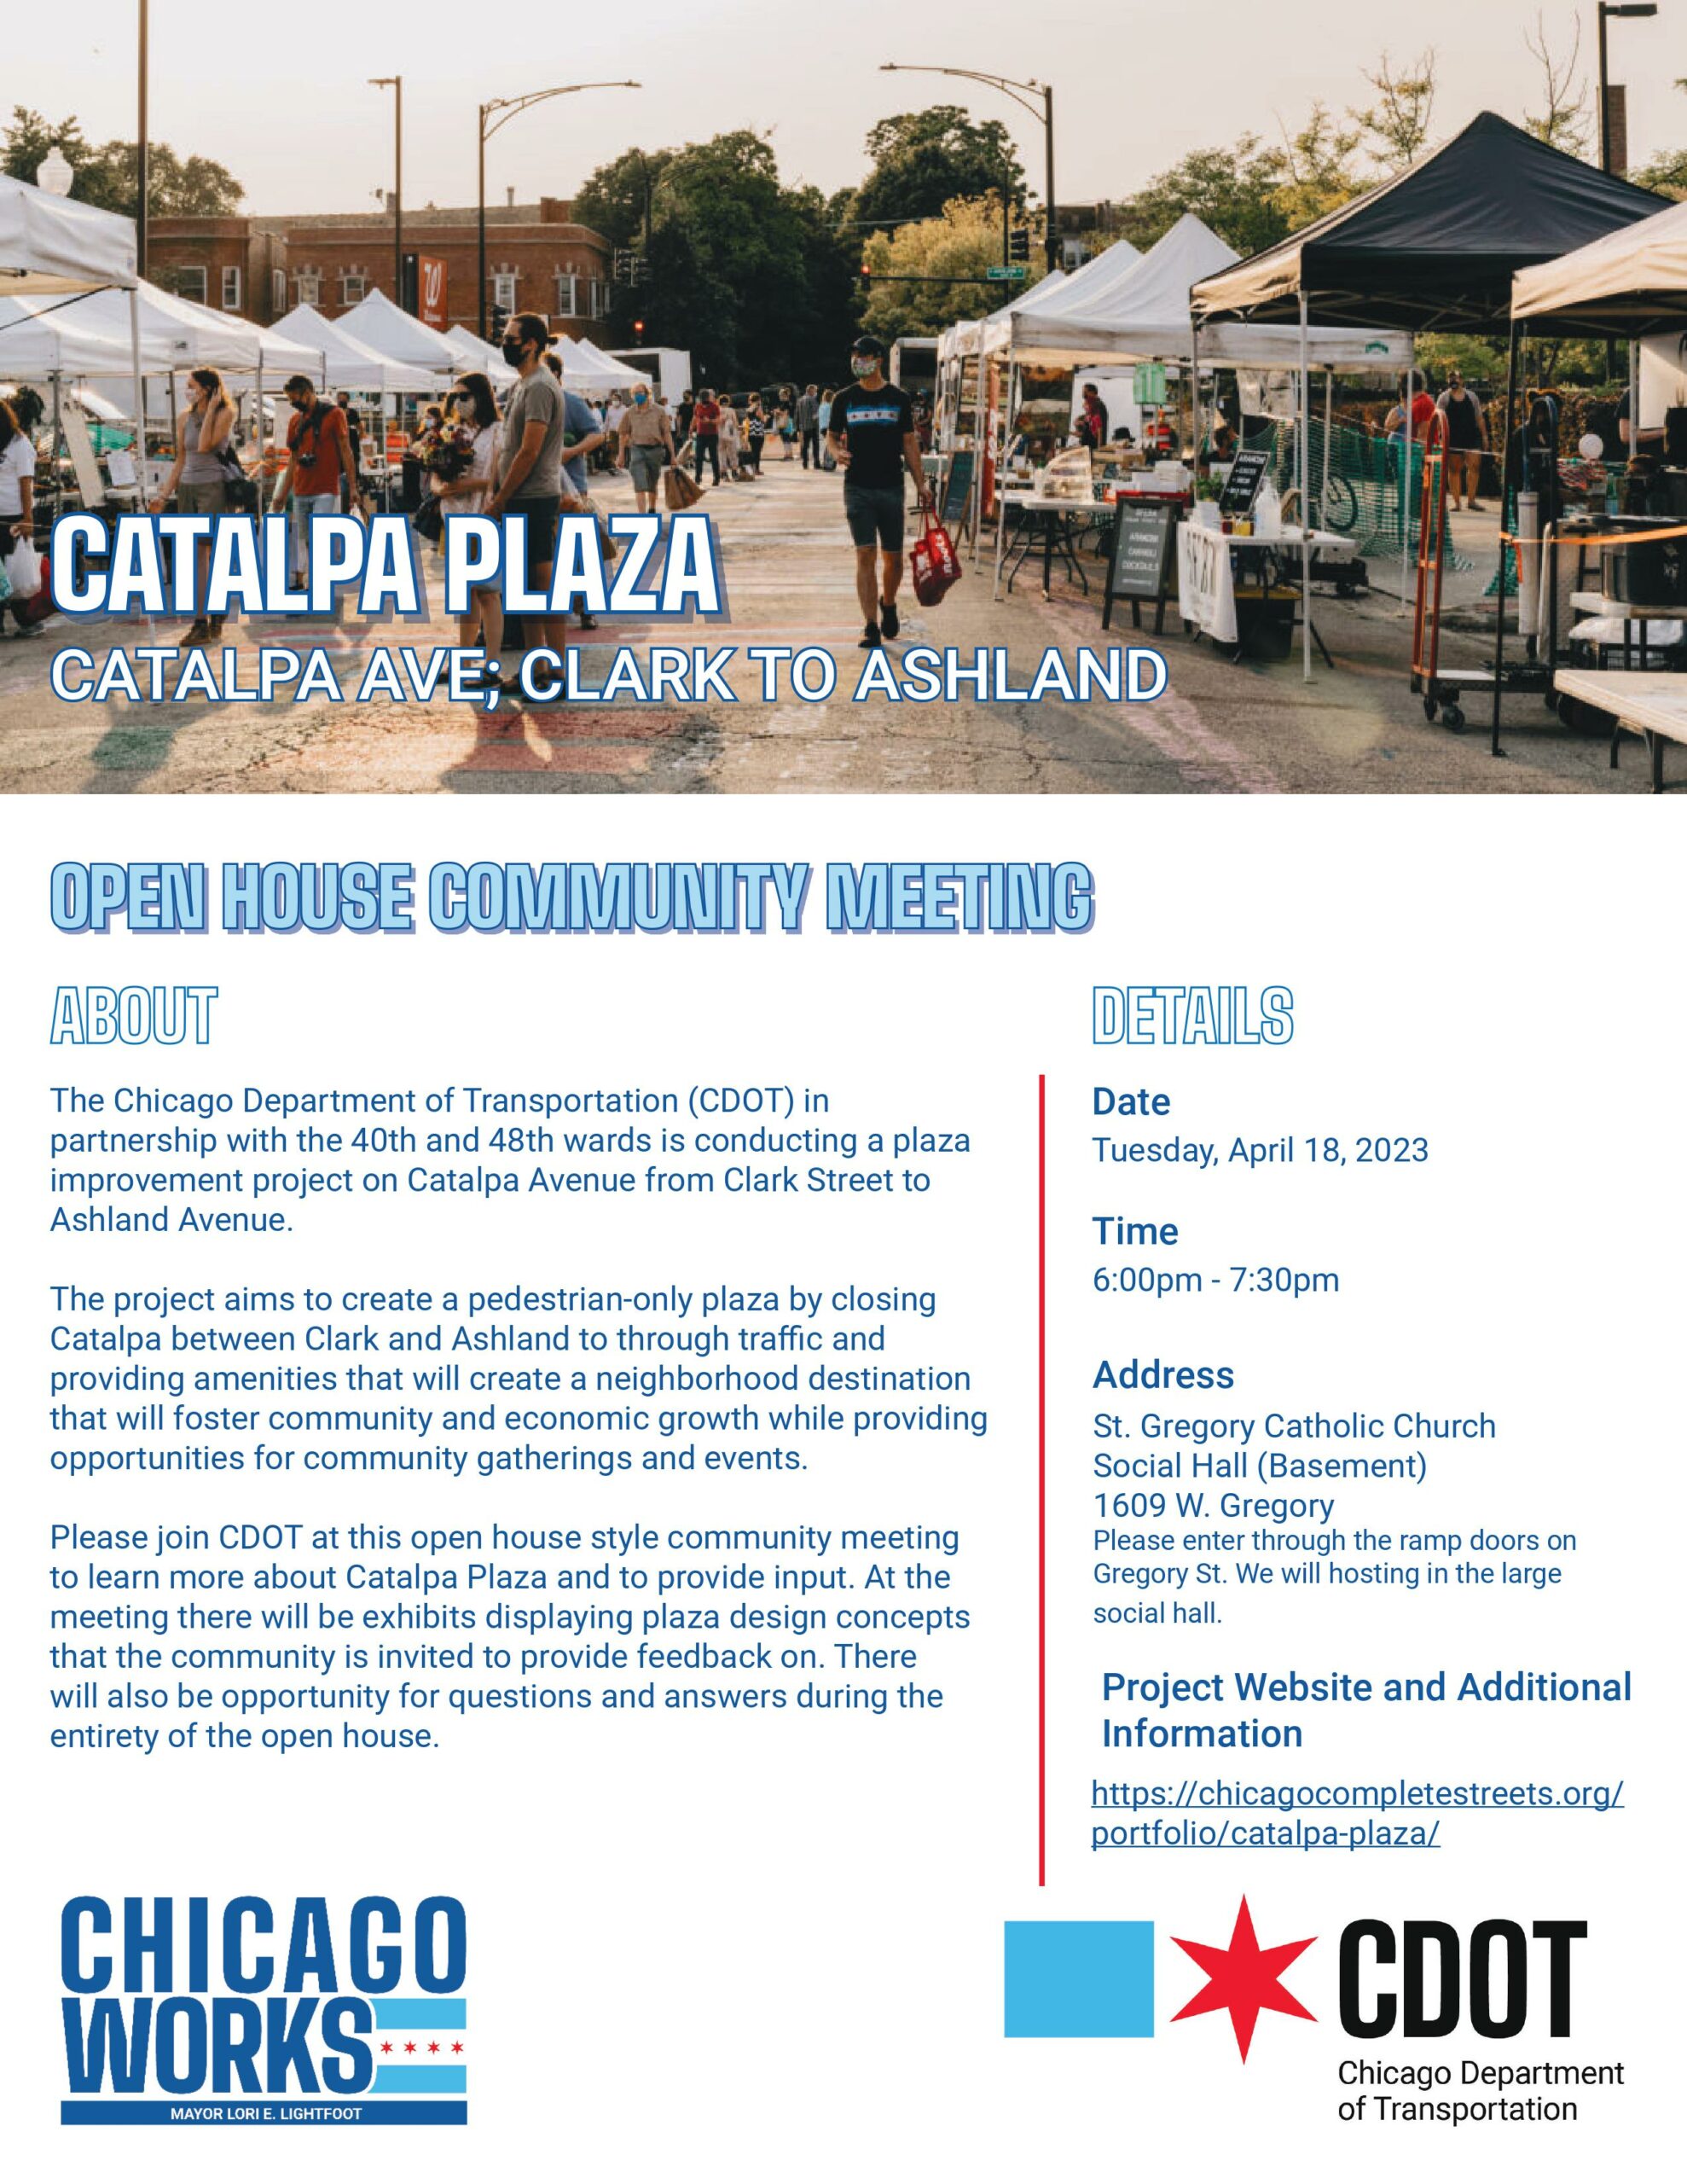 Public Meeting Regarding Catalpa Plaza